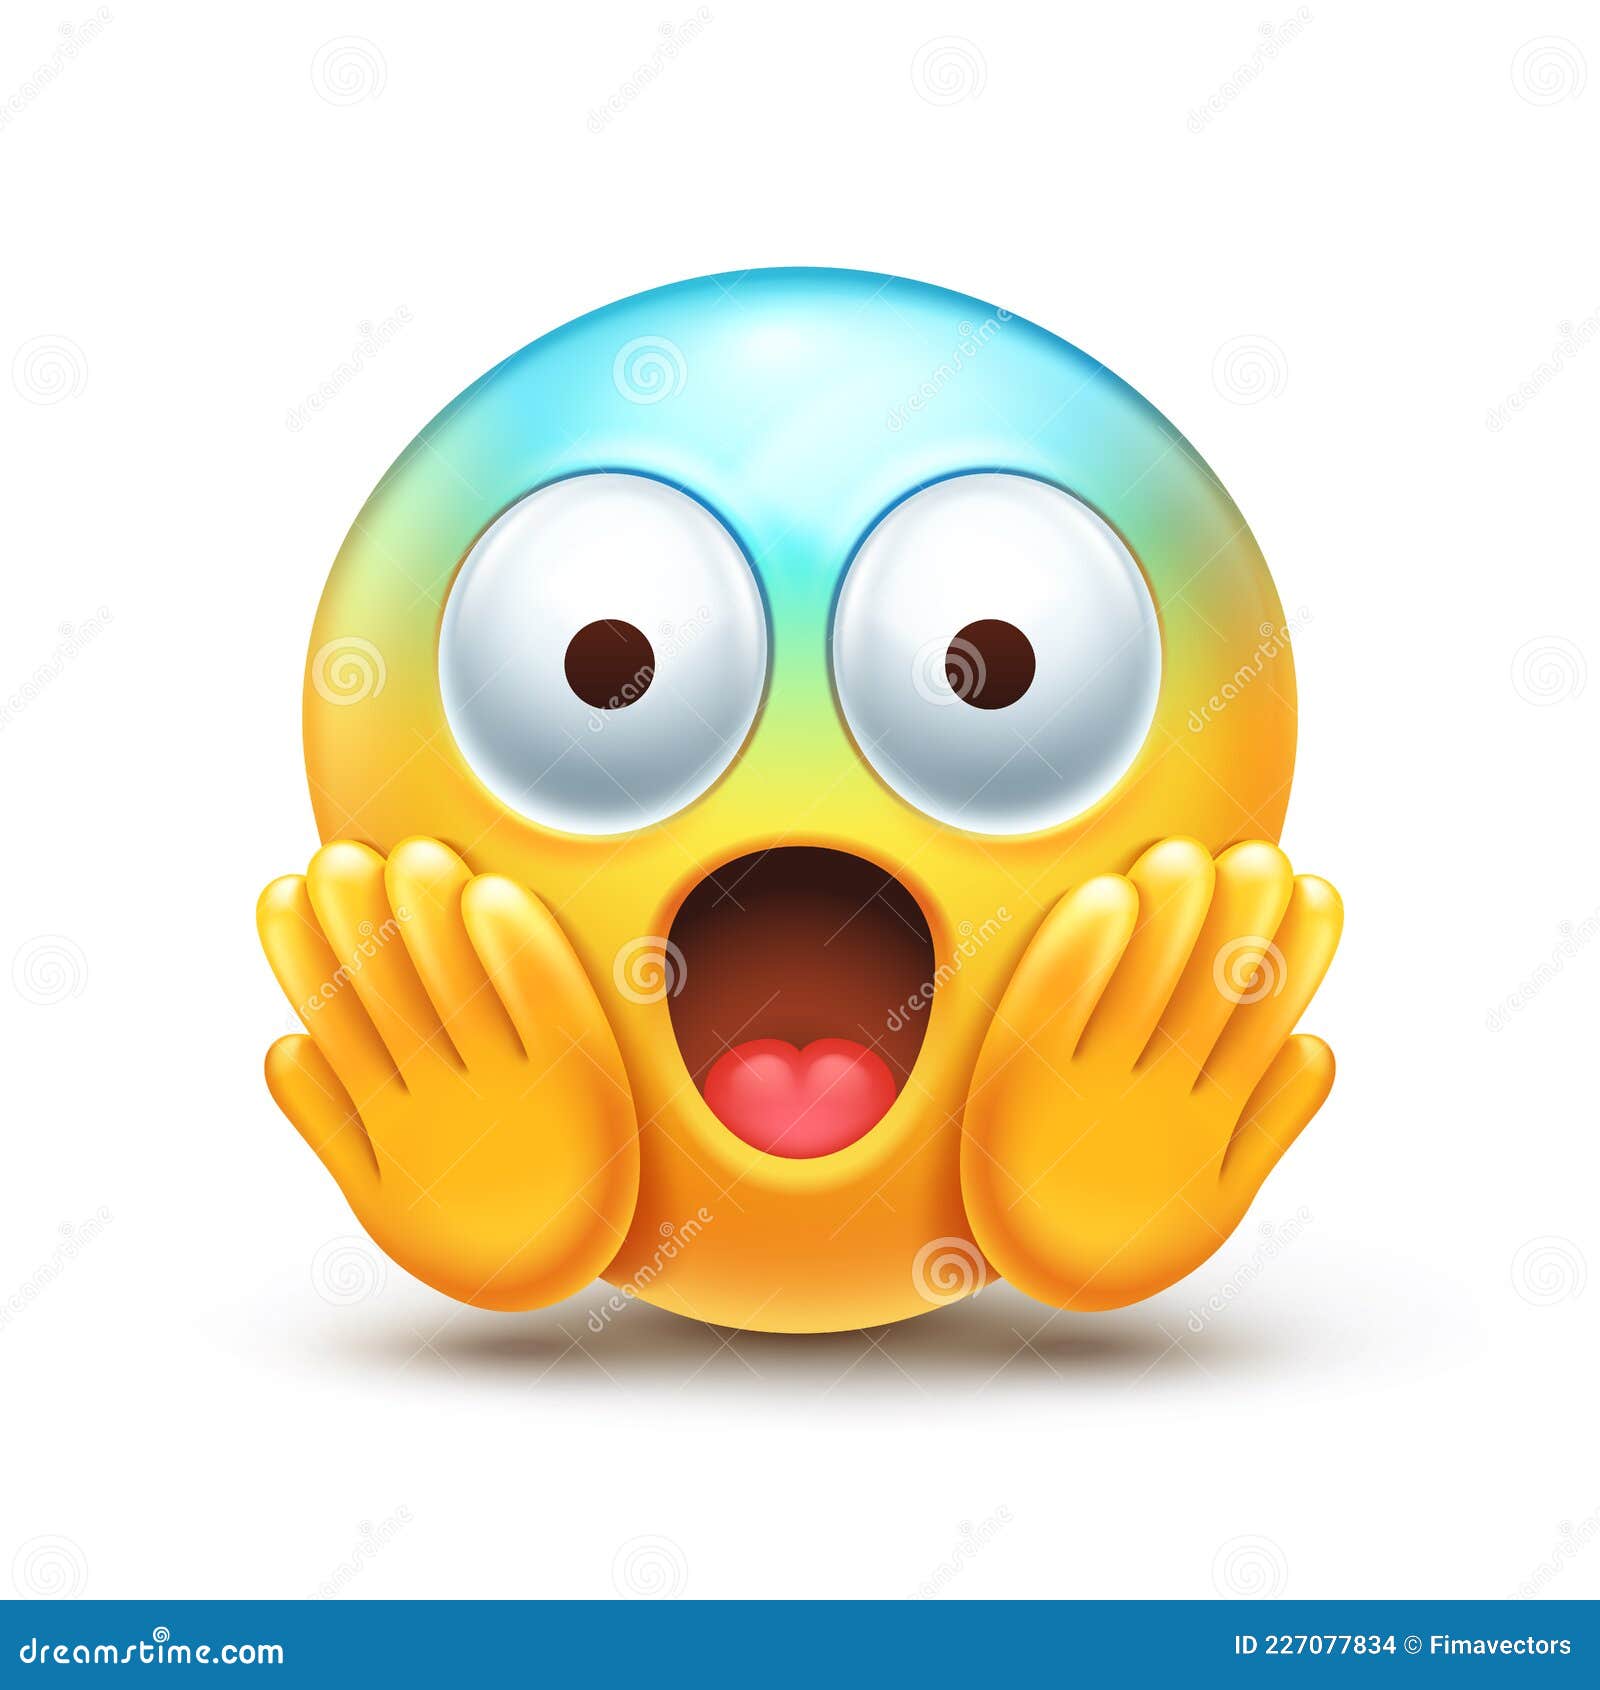 Screaming in fear emoji stock vector. Illustration of loud - 227077834